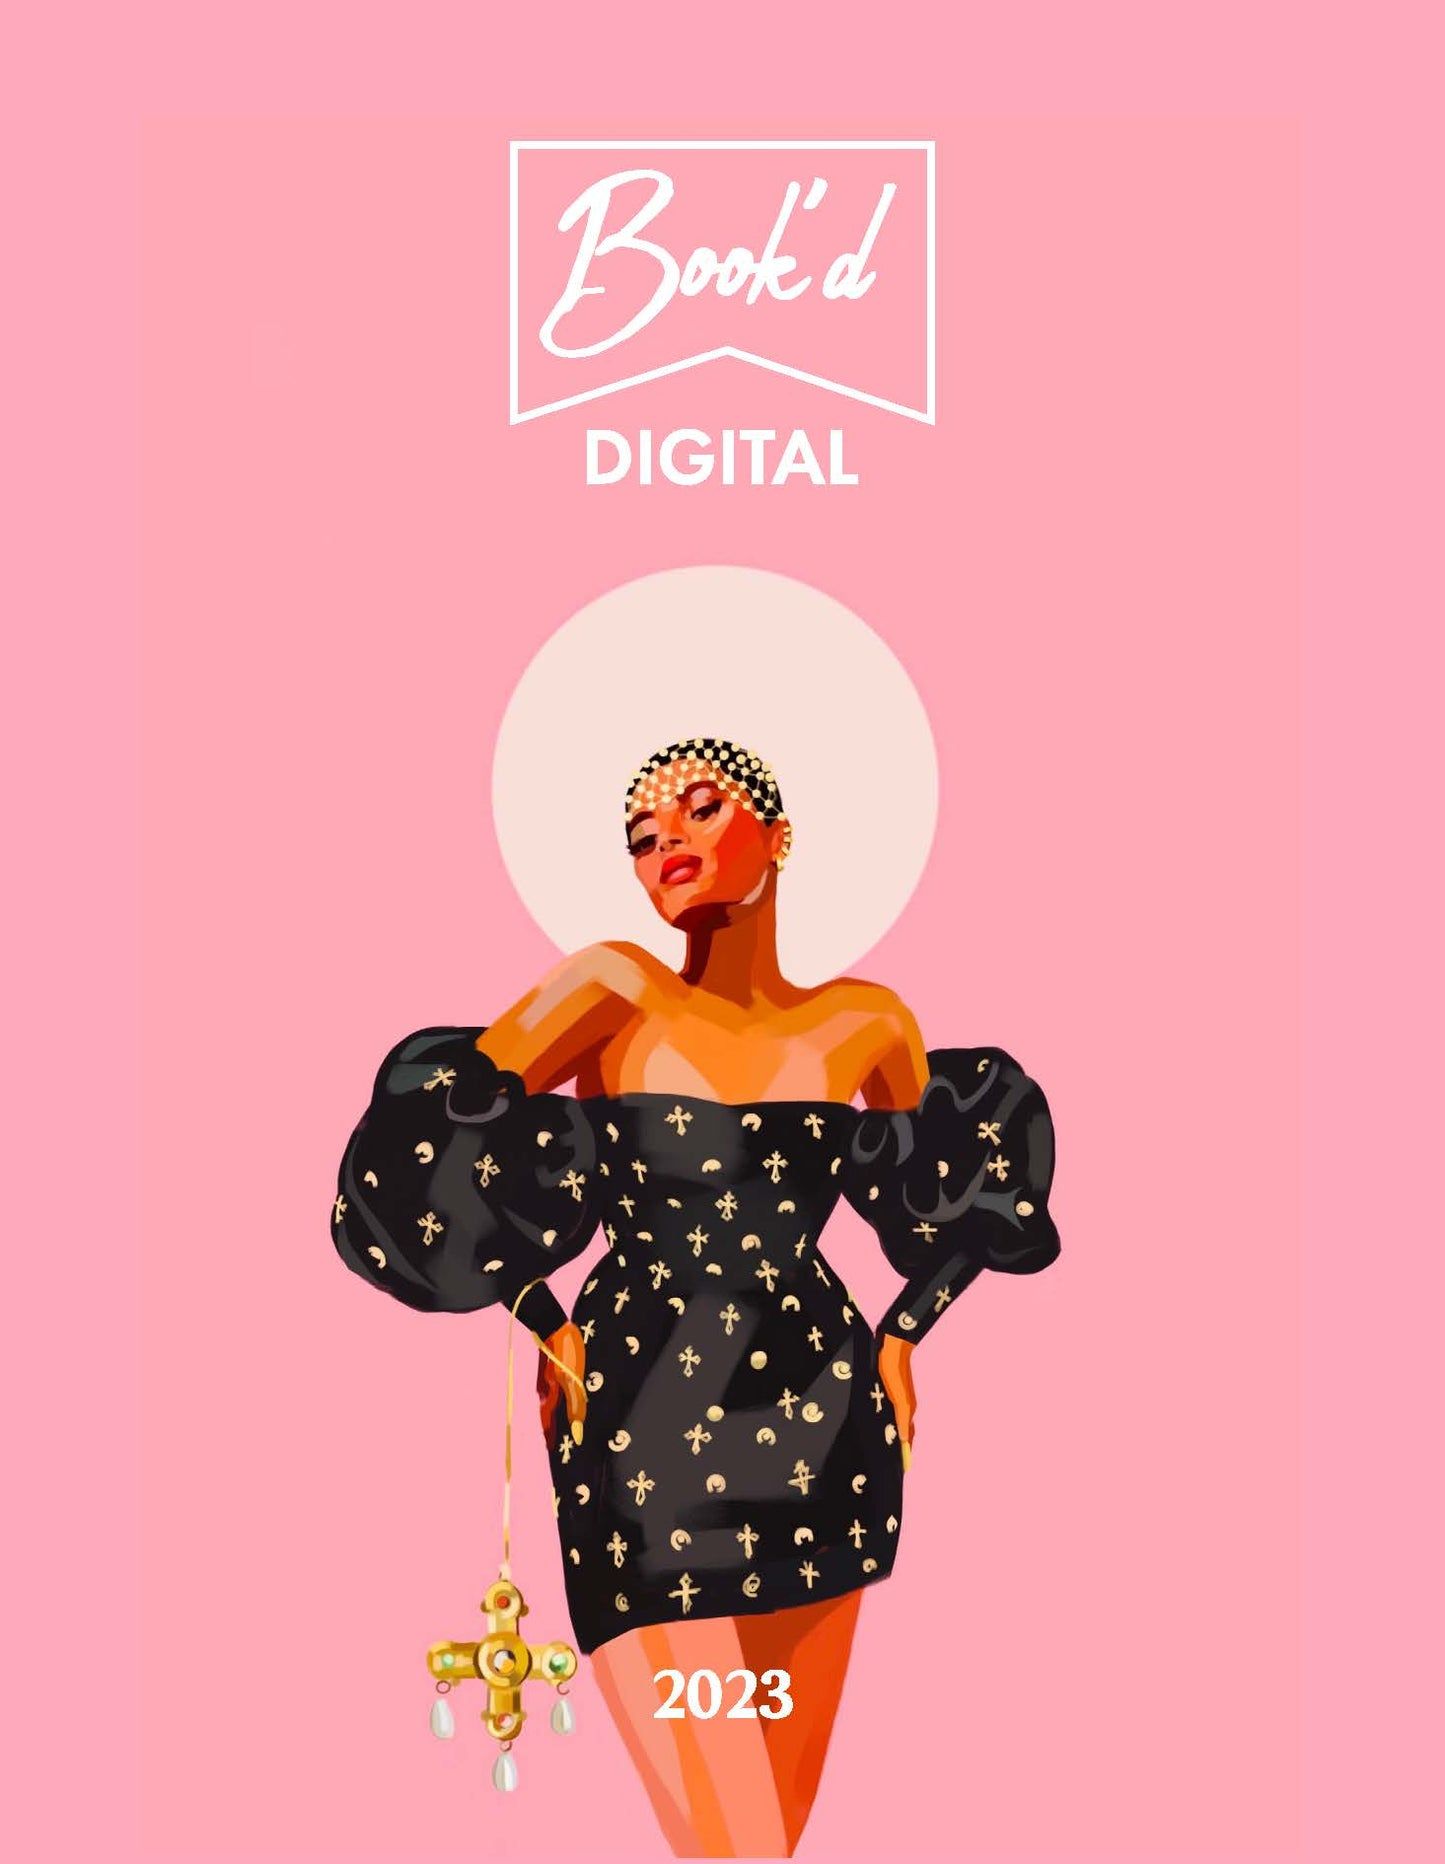 A poster for book d digital - Positivity